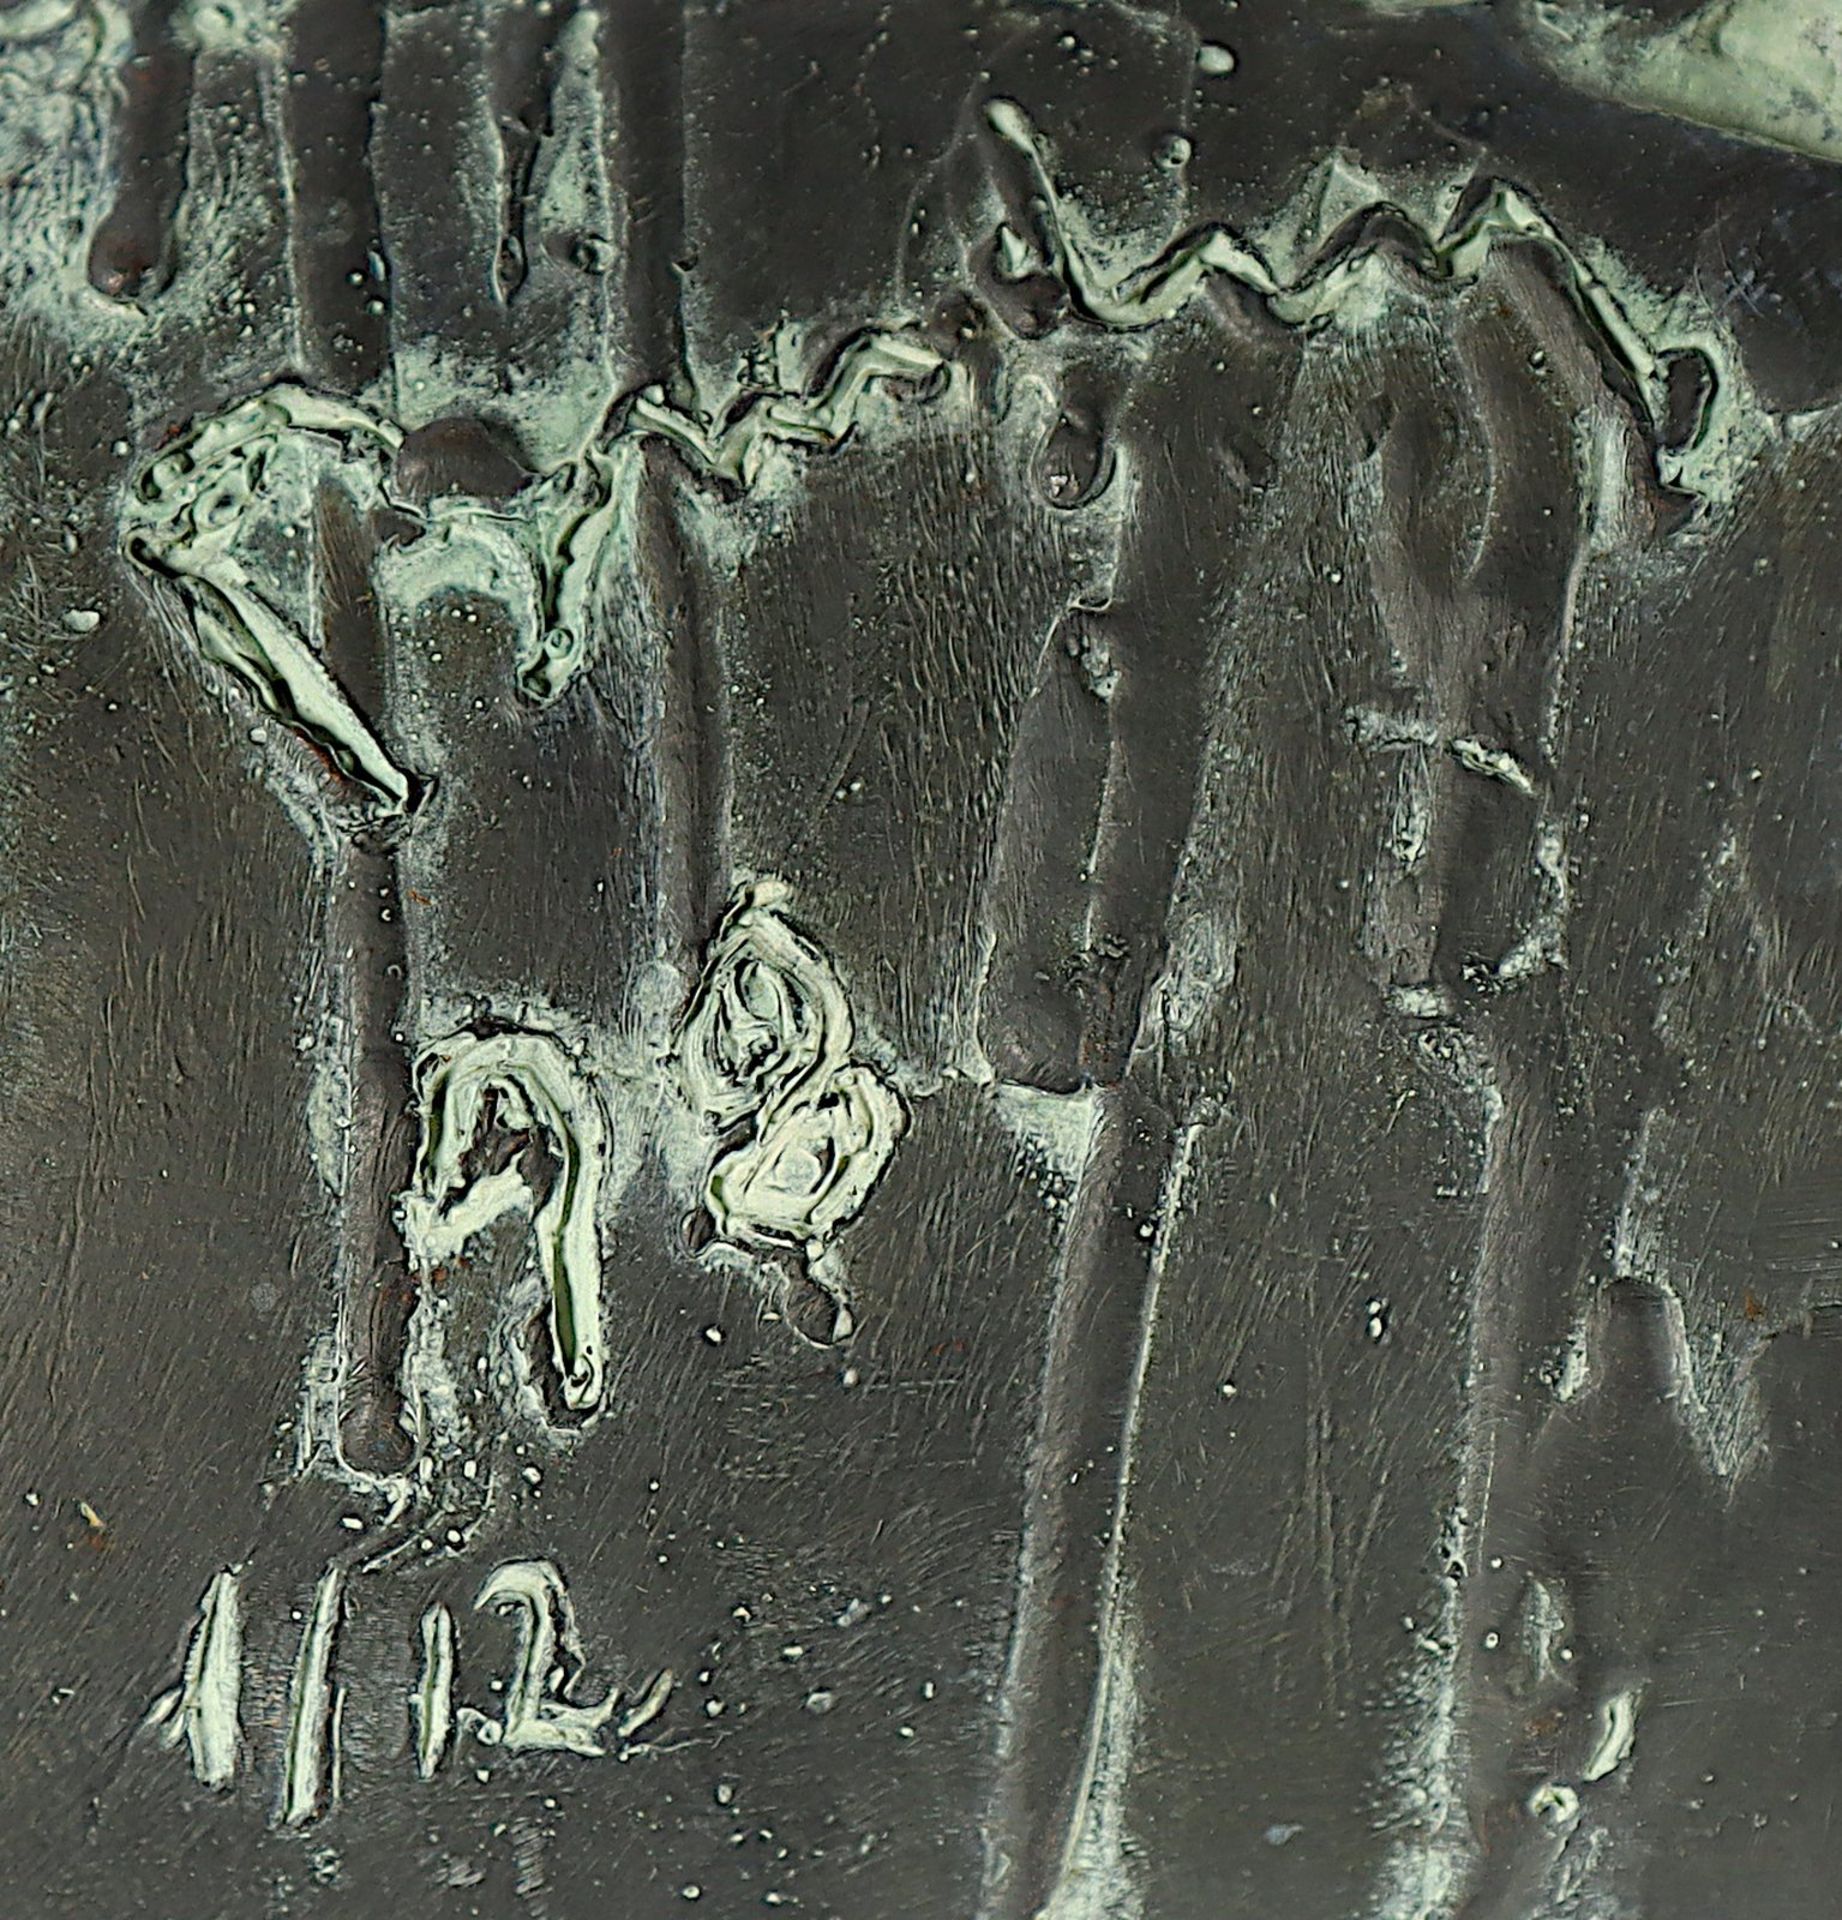 Binding, Wolfgang, "Liegende Katze", Bronze - Image 4 of 4